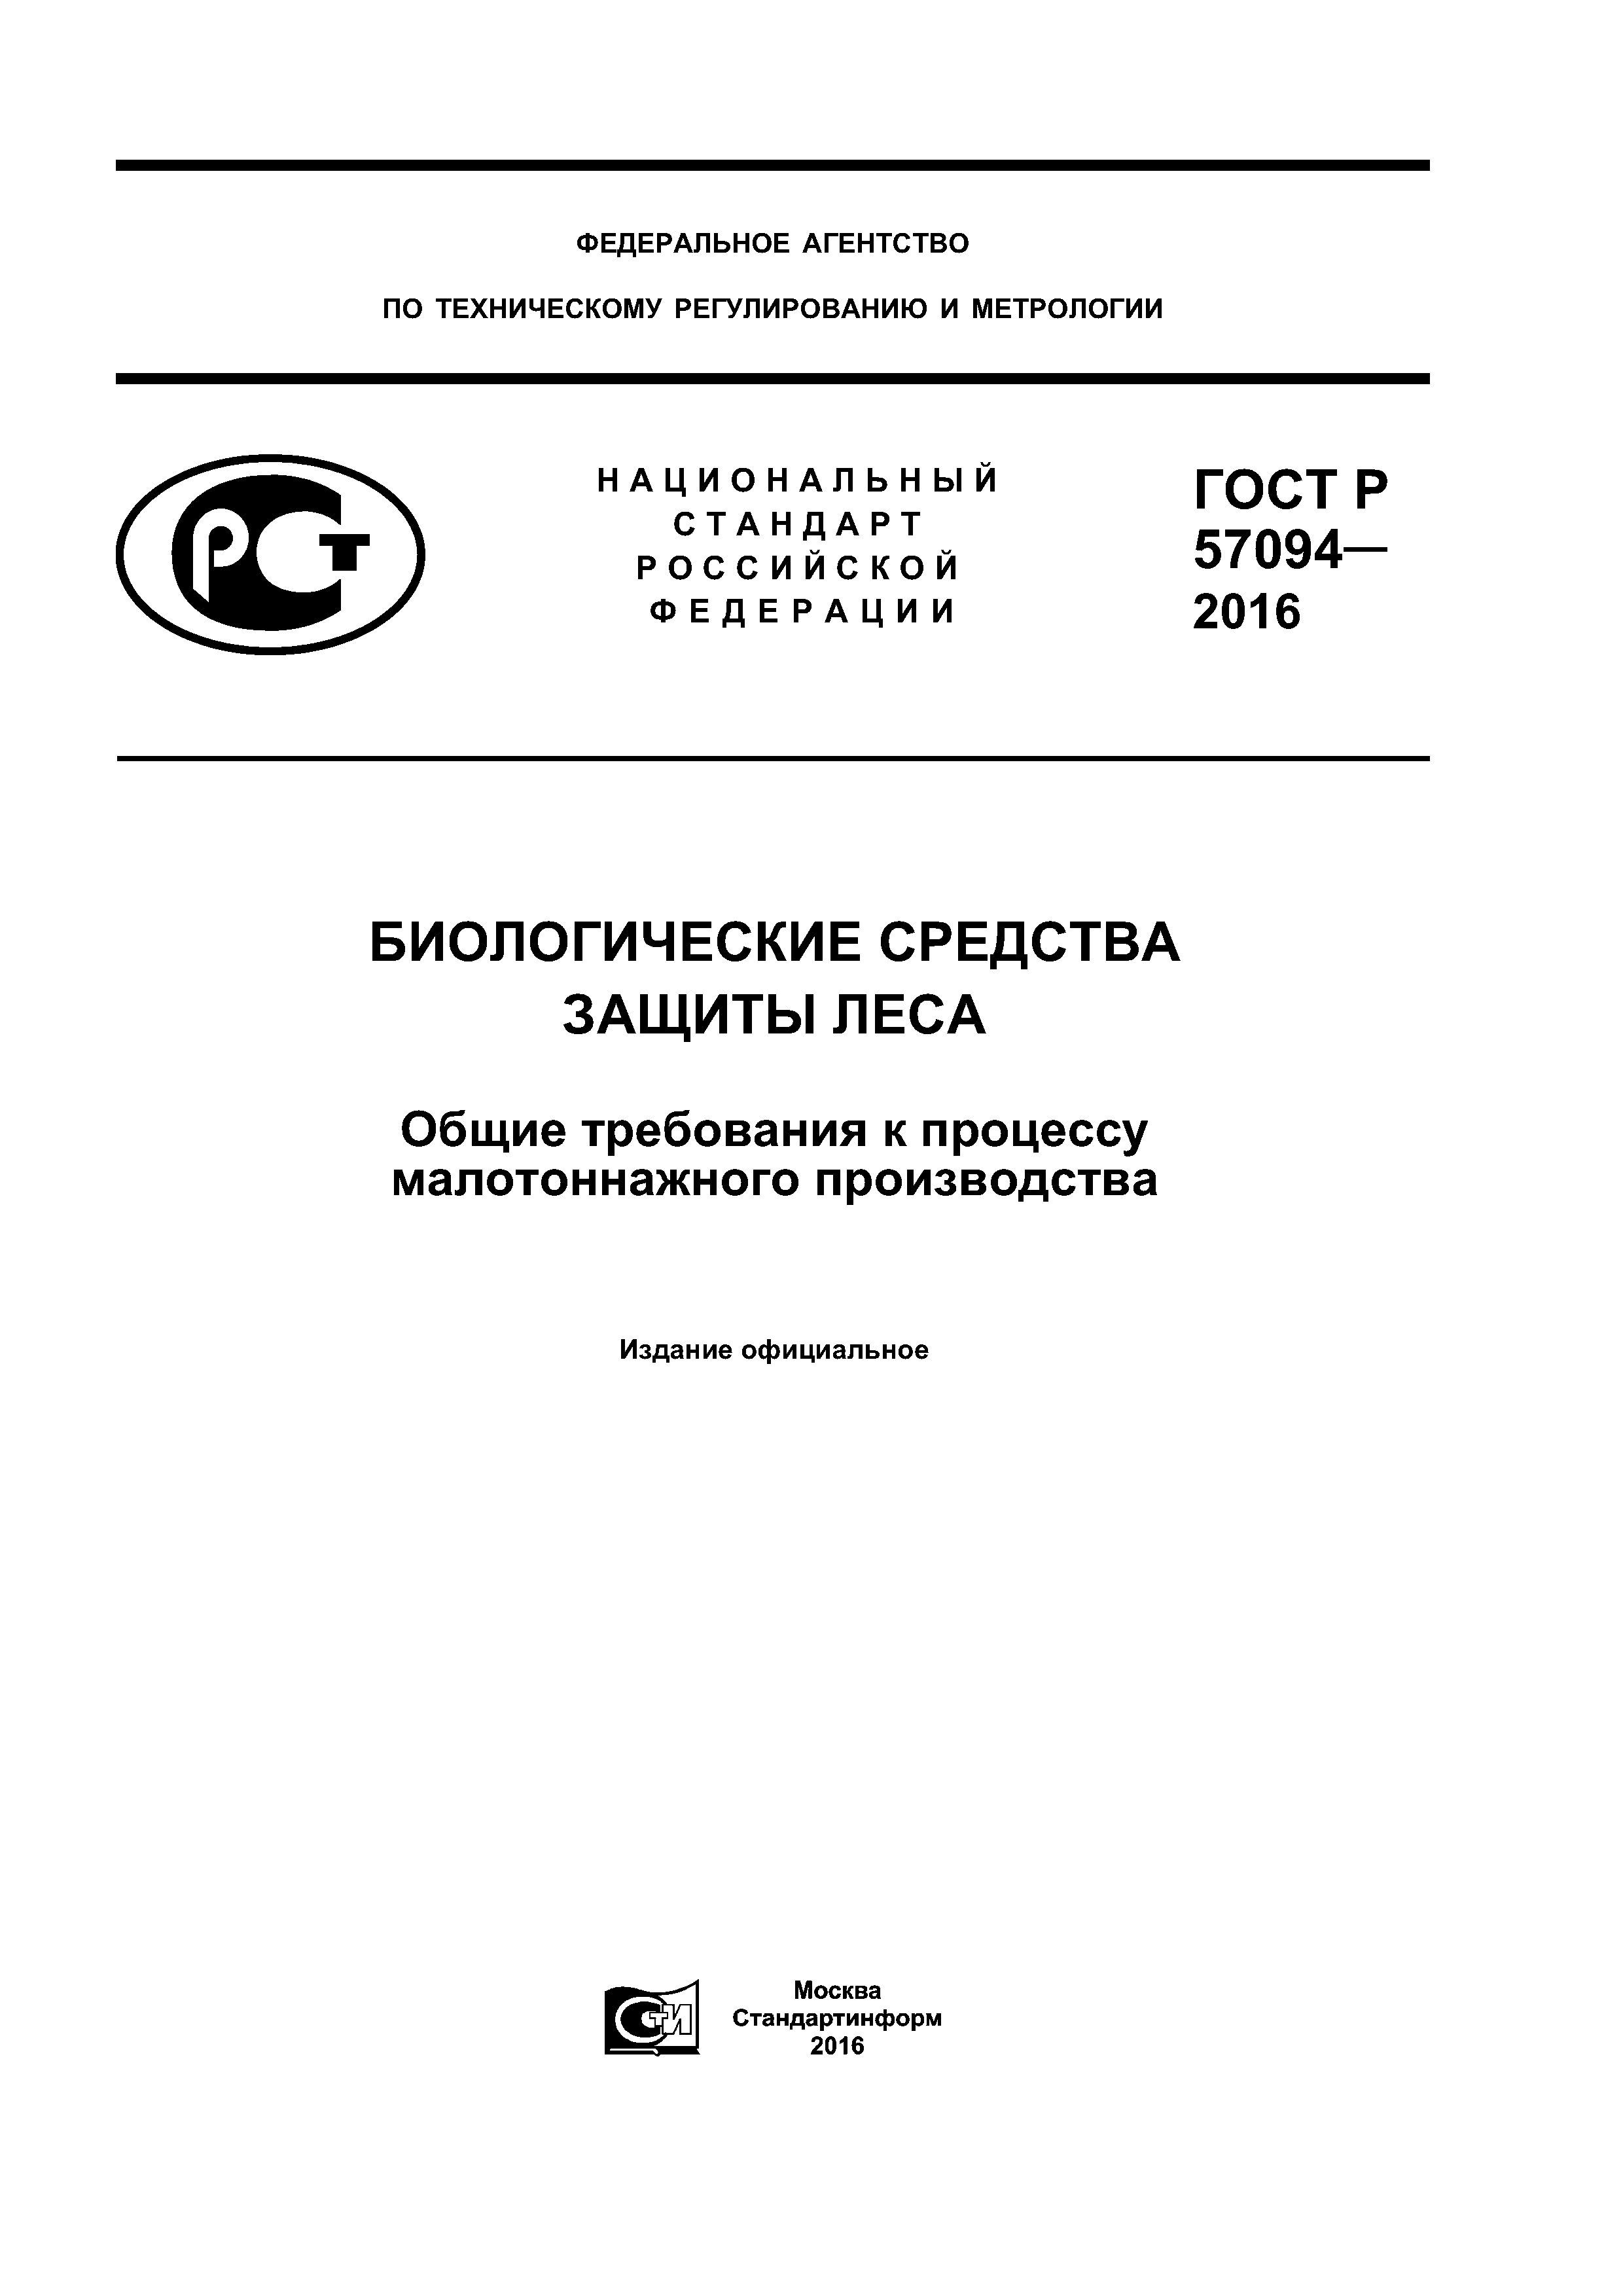 ГОСТ Р 57094-2016